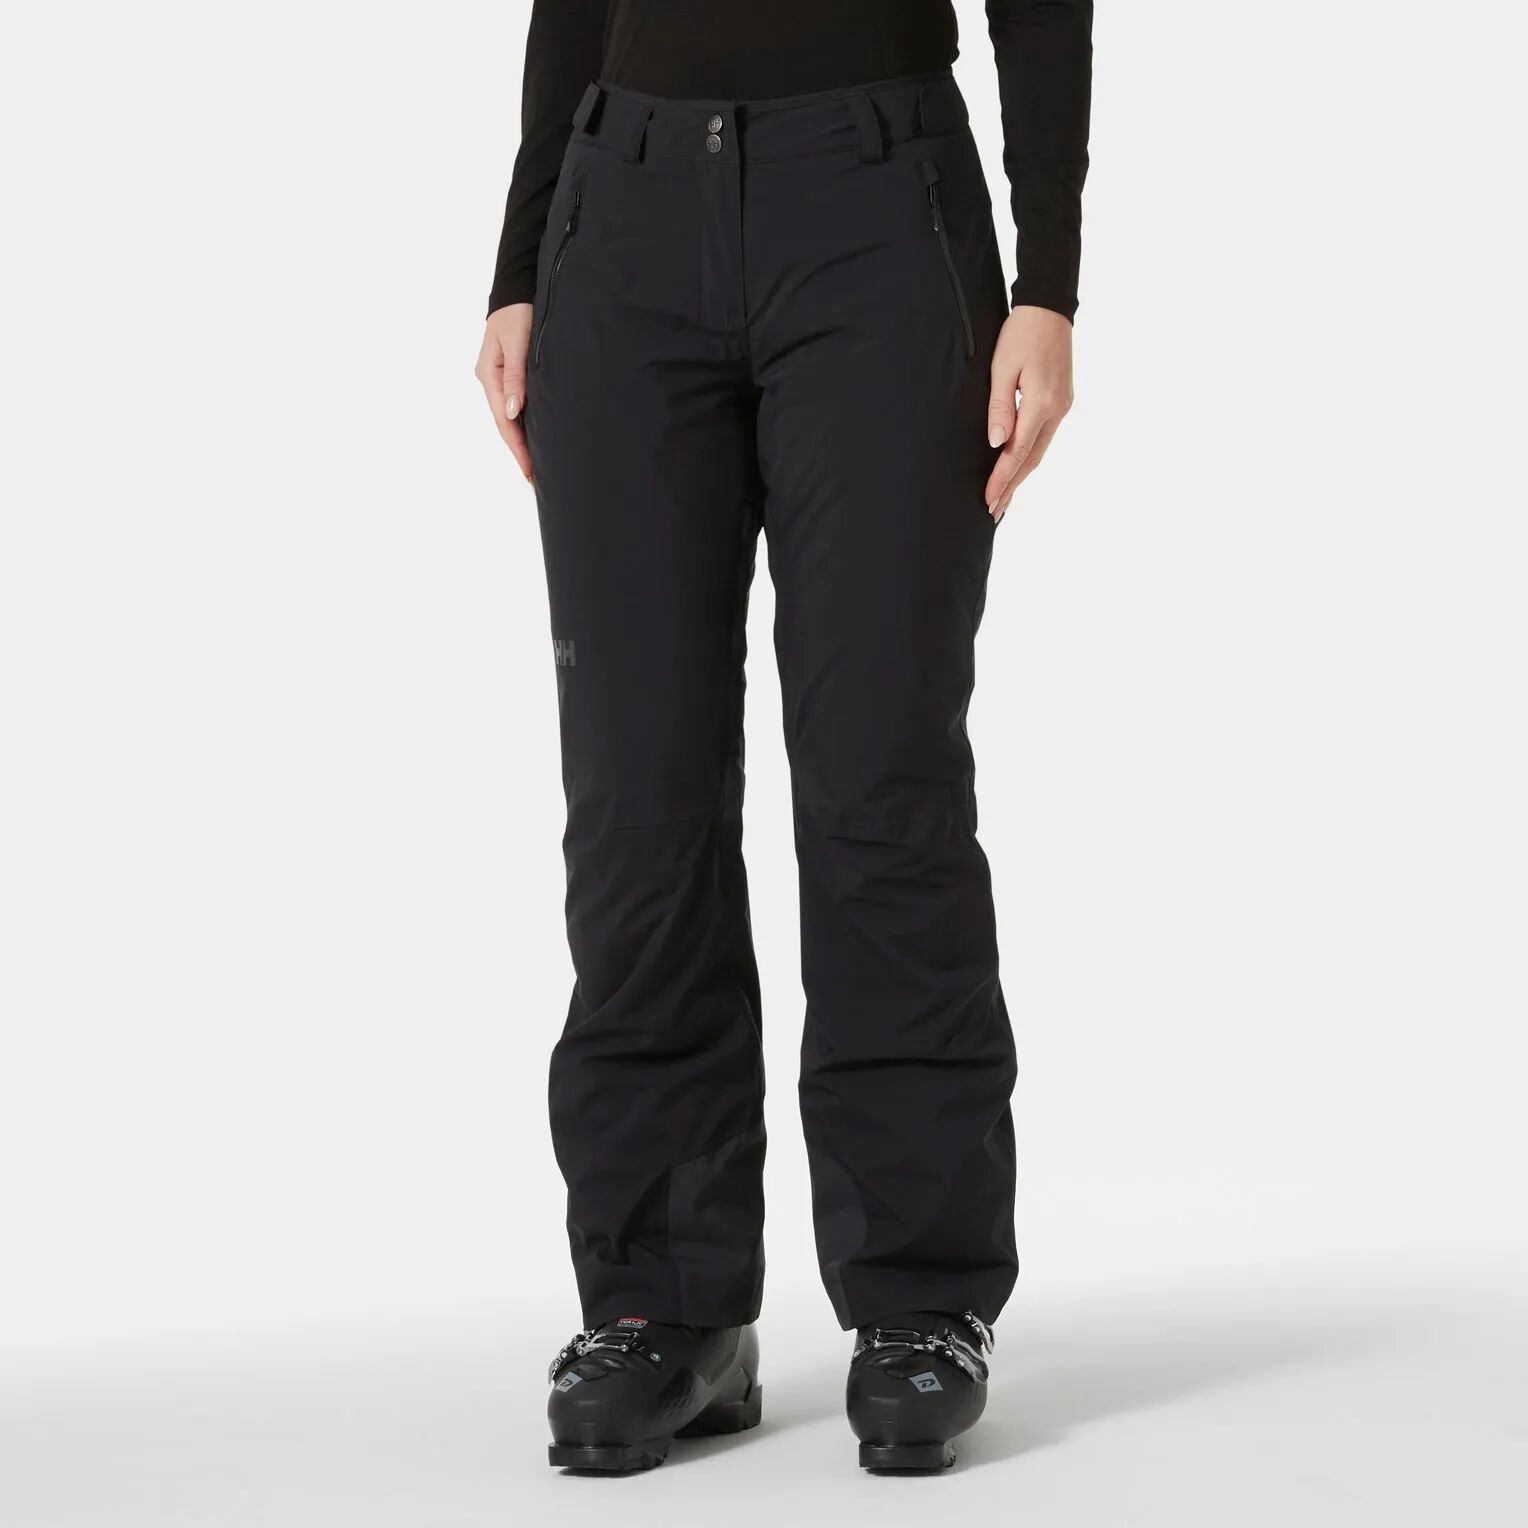 Helly Hansen Women's Legendary Insulated Ski Pants Black M